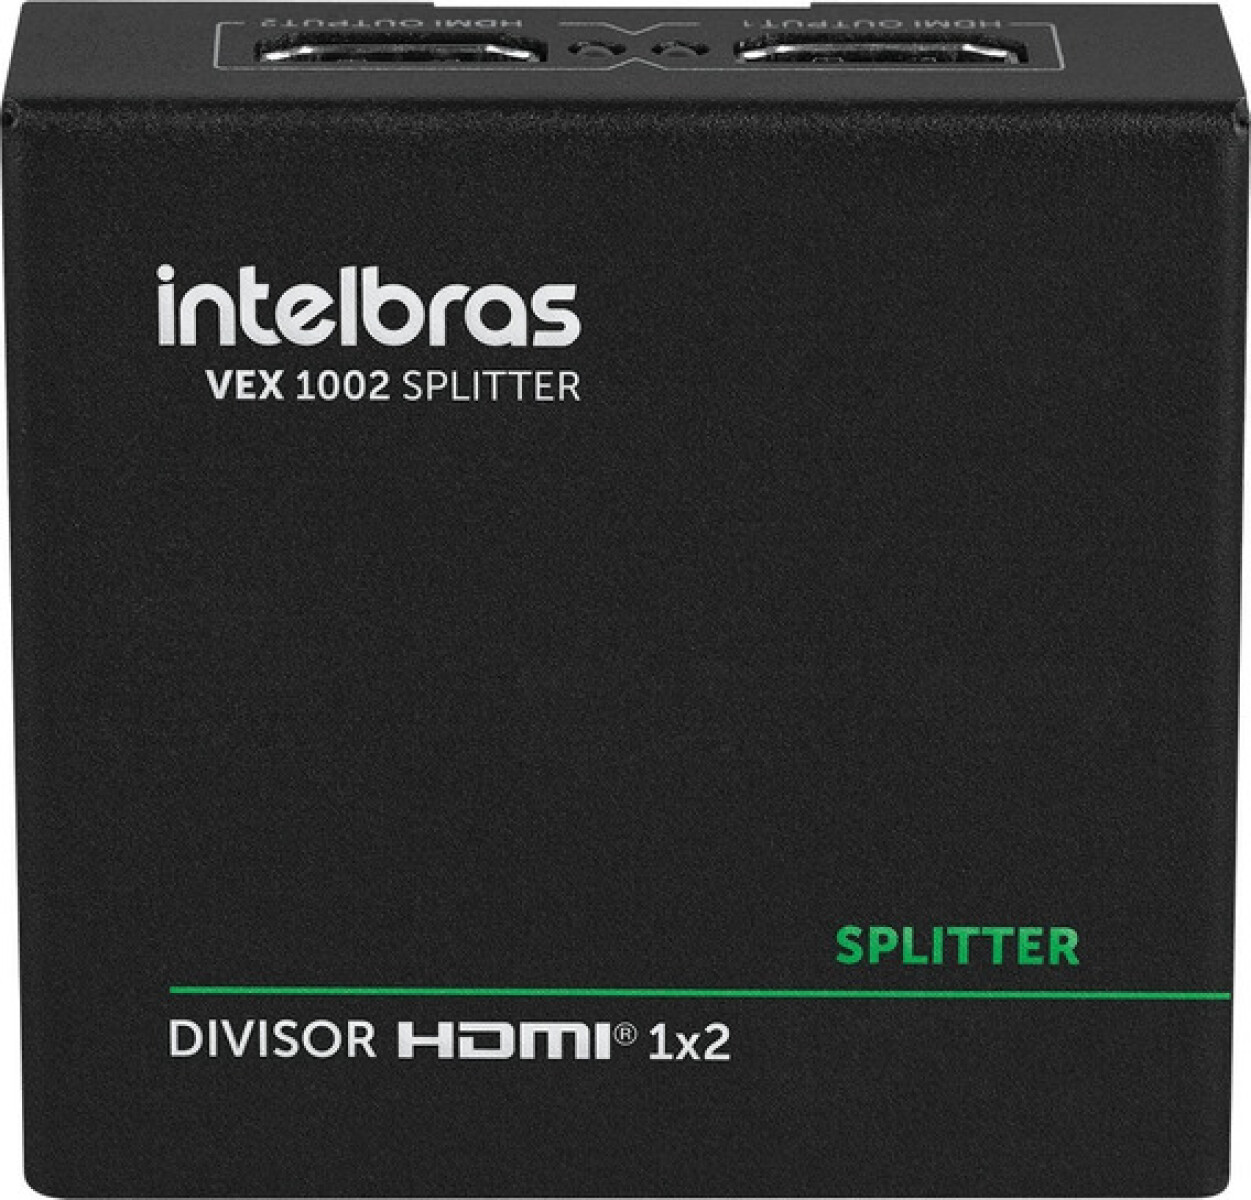 Splitter HDMI 2 Puertos 4K / VEX 1002 - INTELBRAS - Splitter Hdmi 2 Puertos 4k / Vex 1002 - Intelbras 